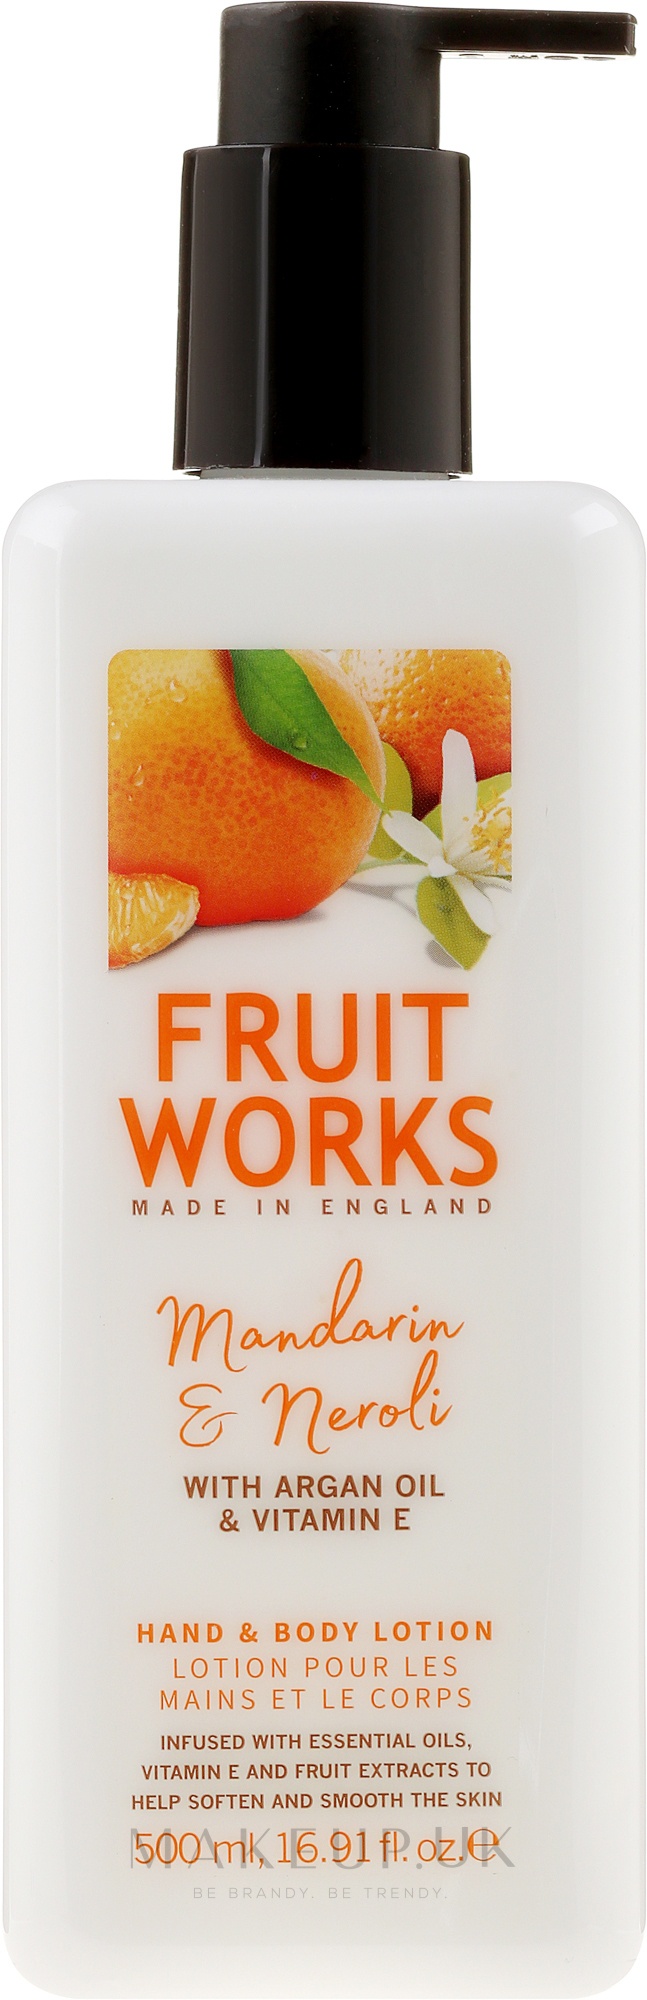 Fruit Works Body Lotion Mandarin Neroli